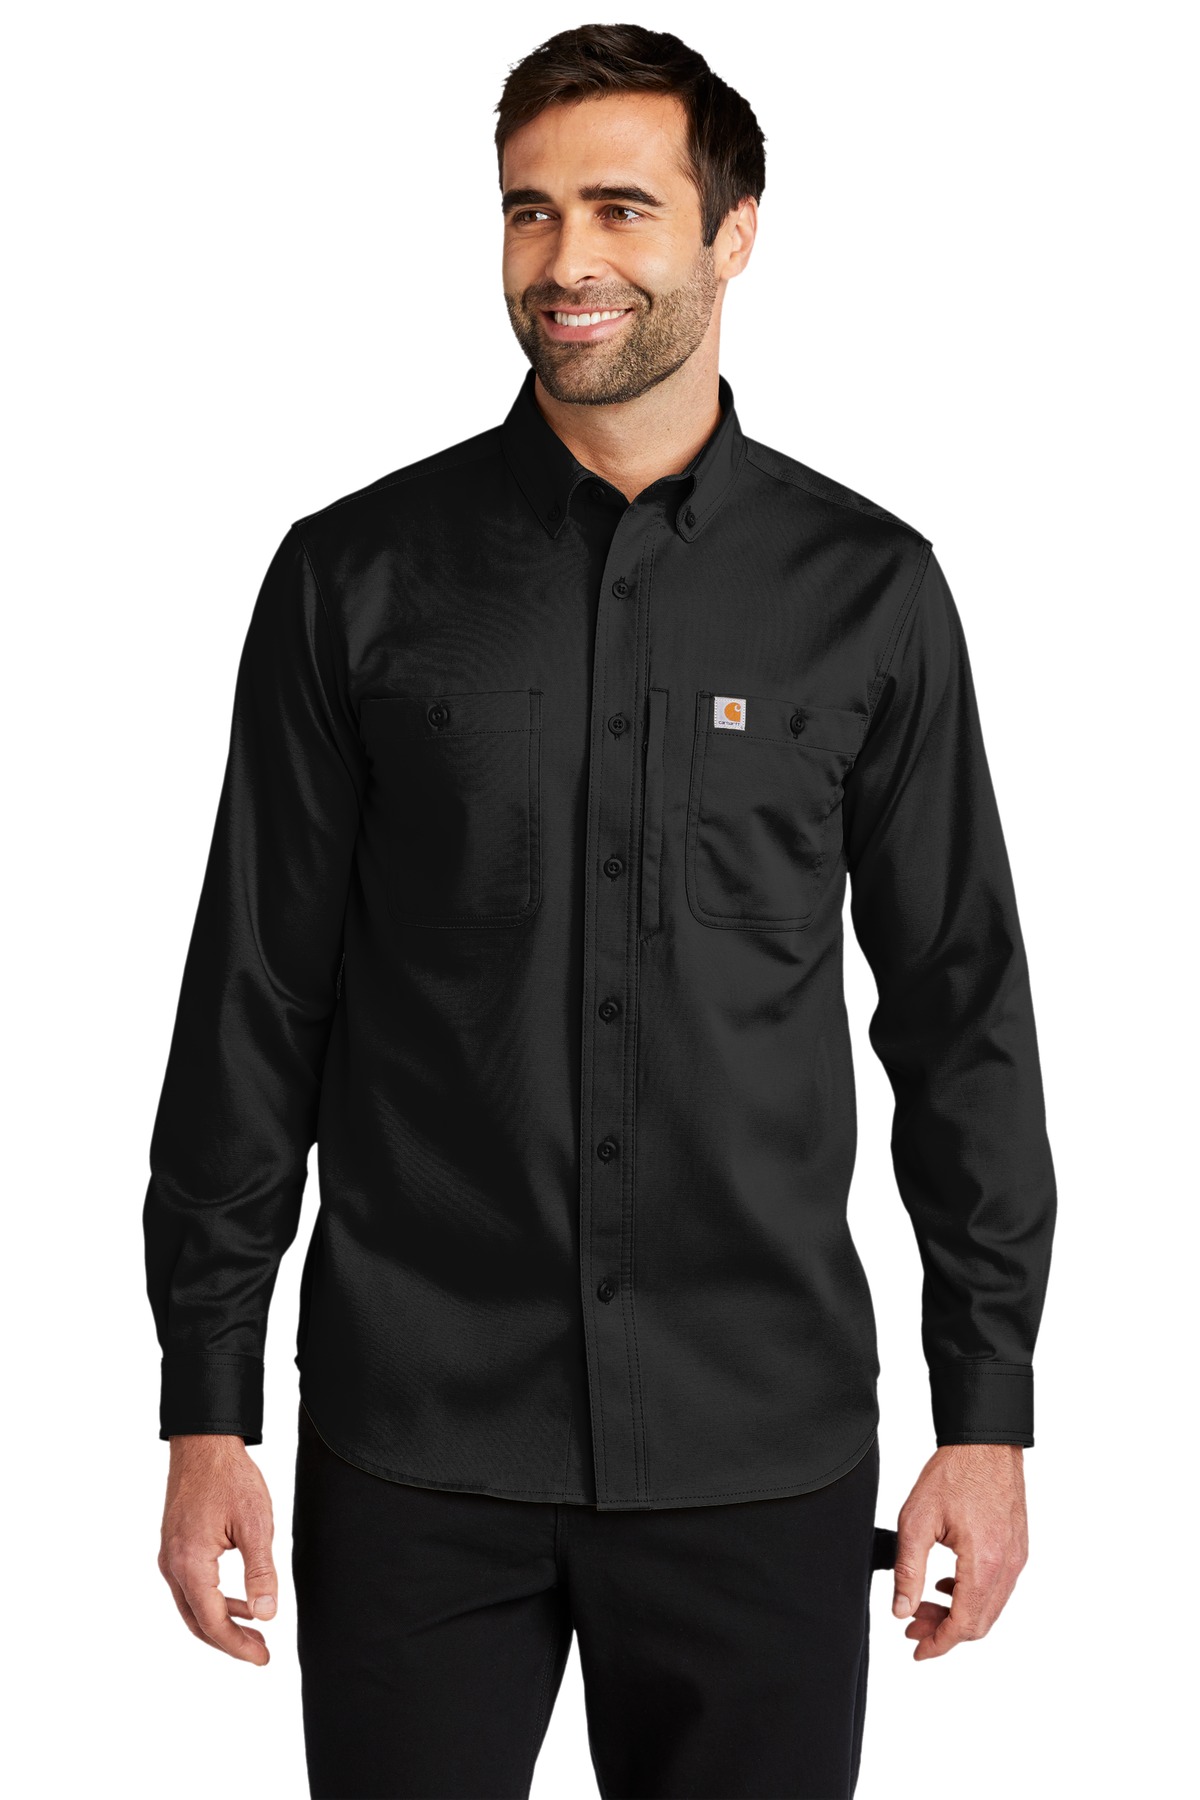 Carhartt Rugged Professional Series Long Sleeve Shirt-Carhartt